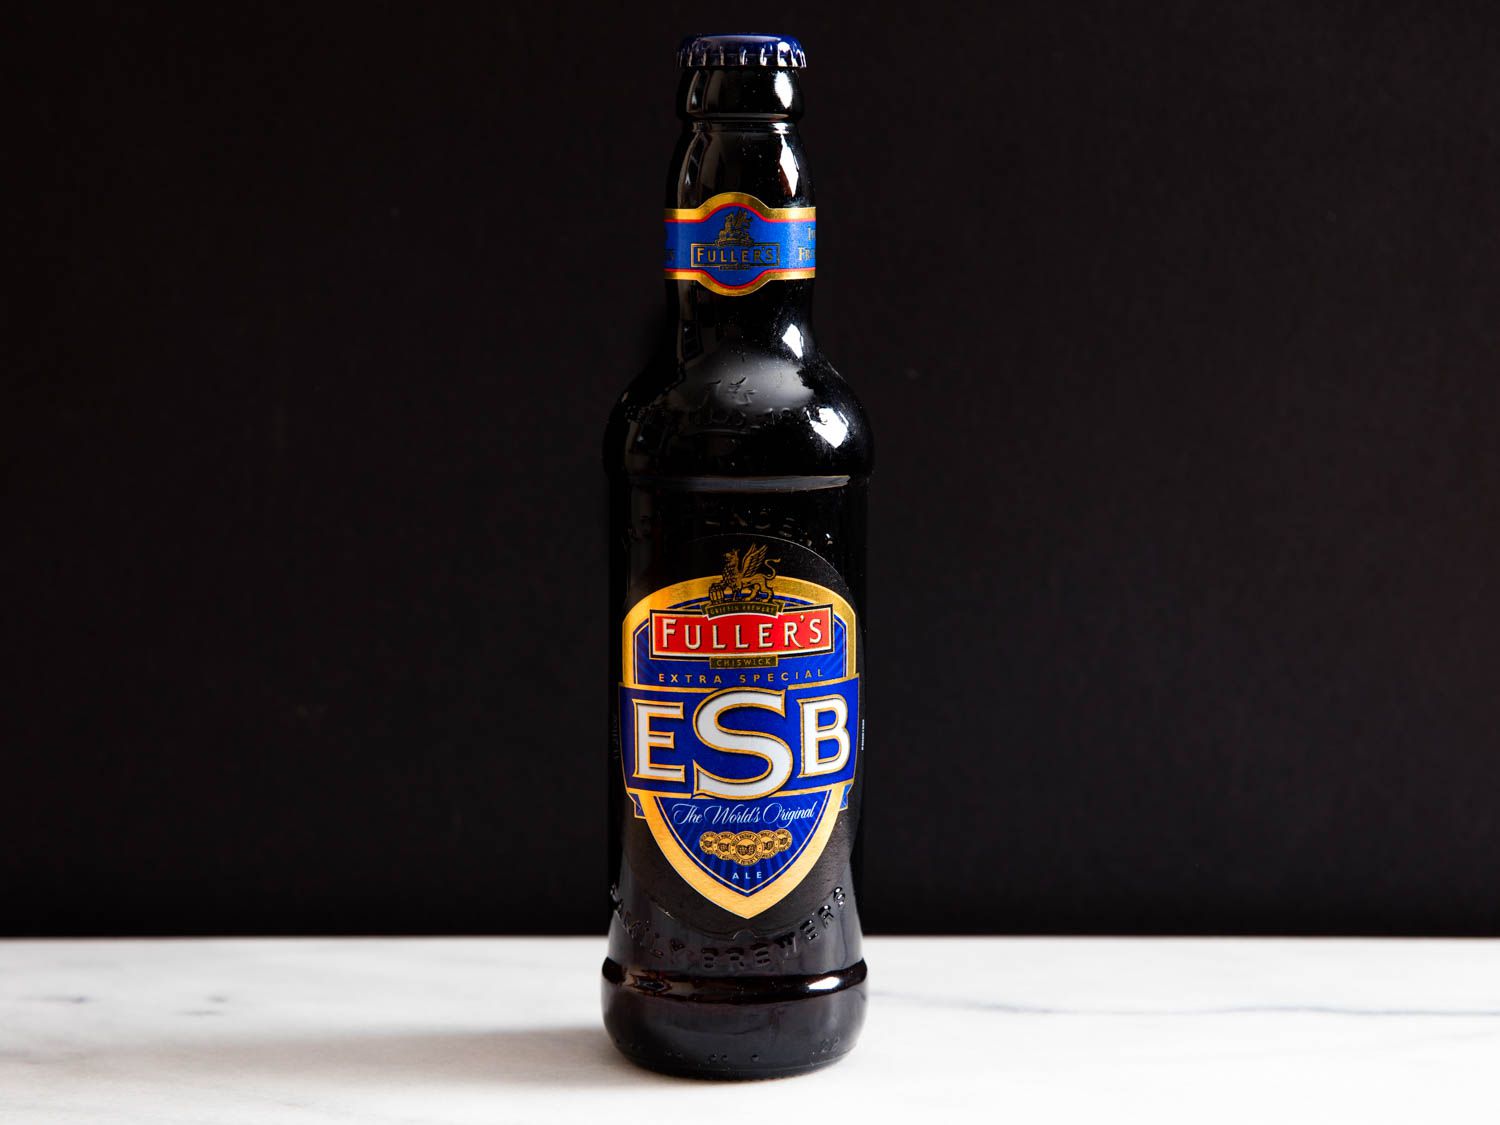 20160208 - esb -啤酒vicky -沃斯克- 3. - jpg